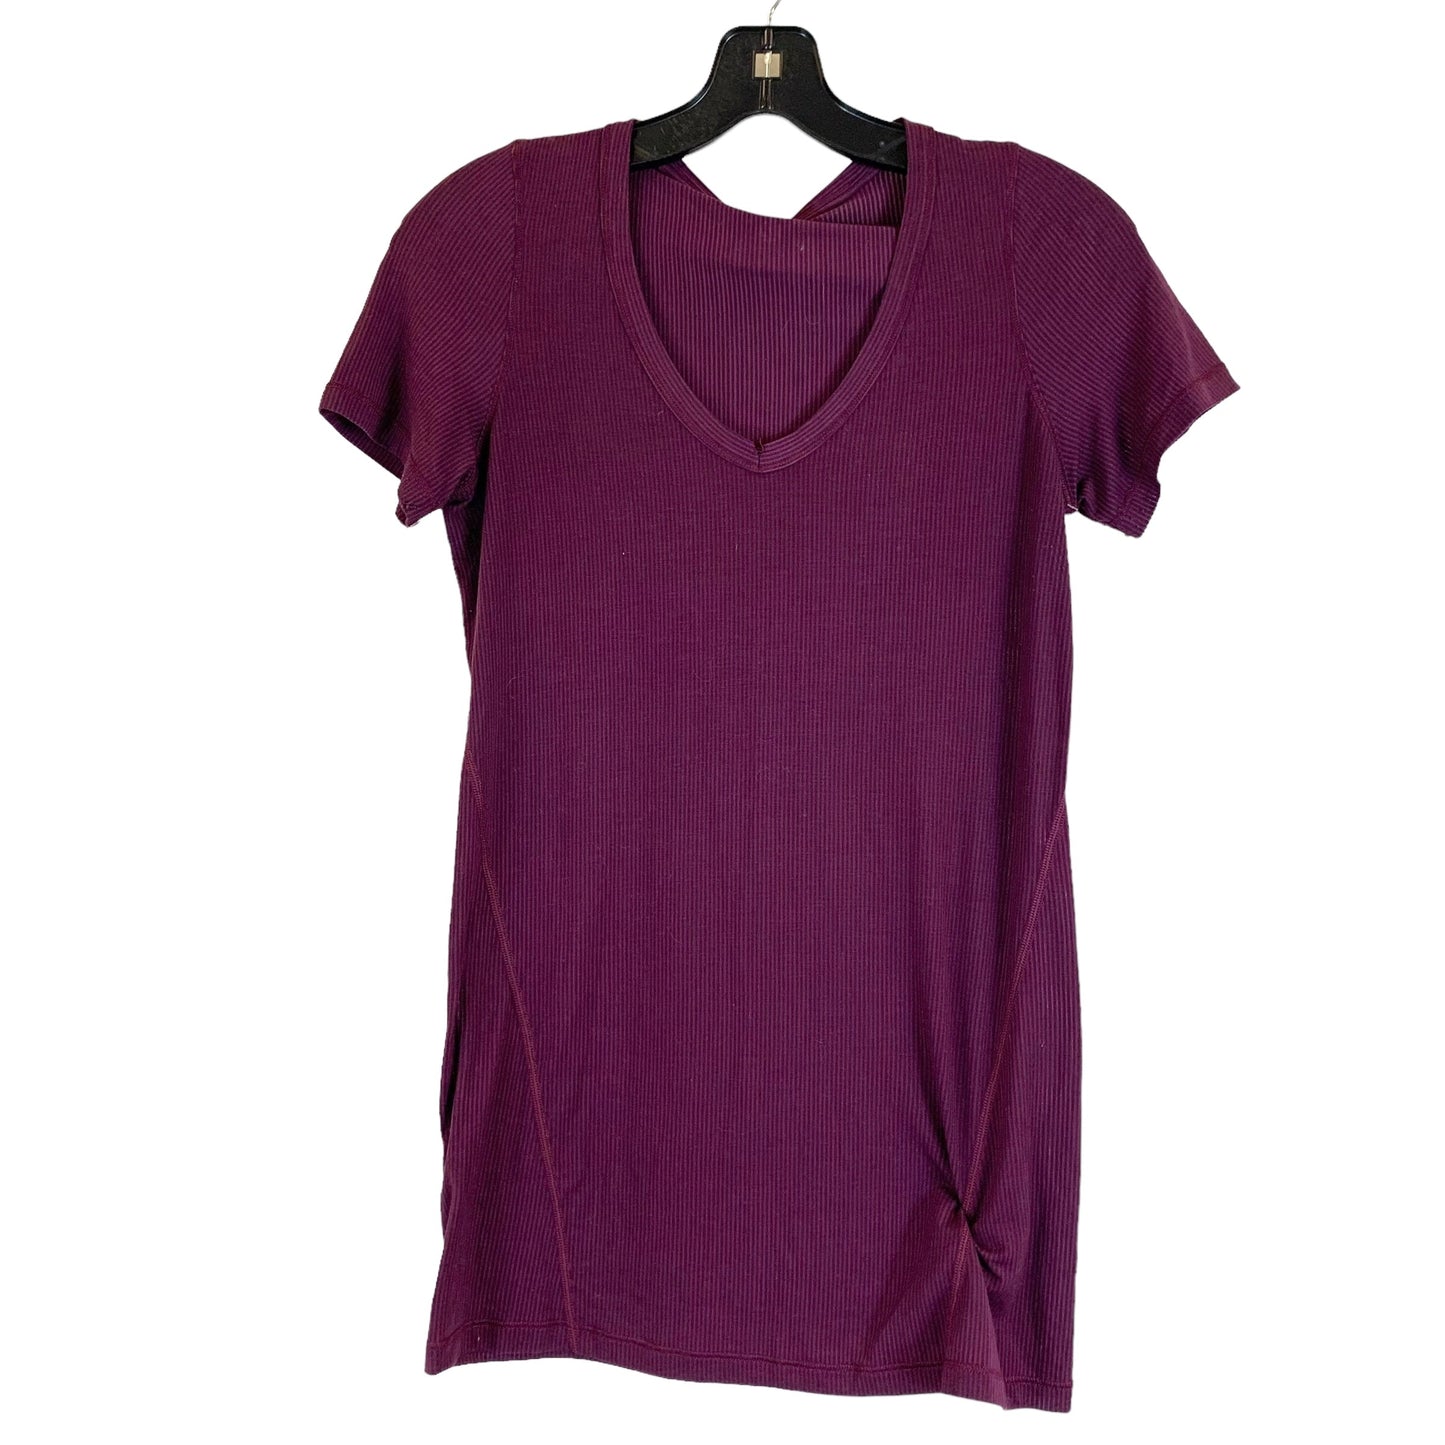 Purple Athletic Top Short Sleeve Lululemon, Size S